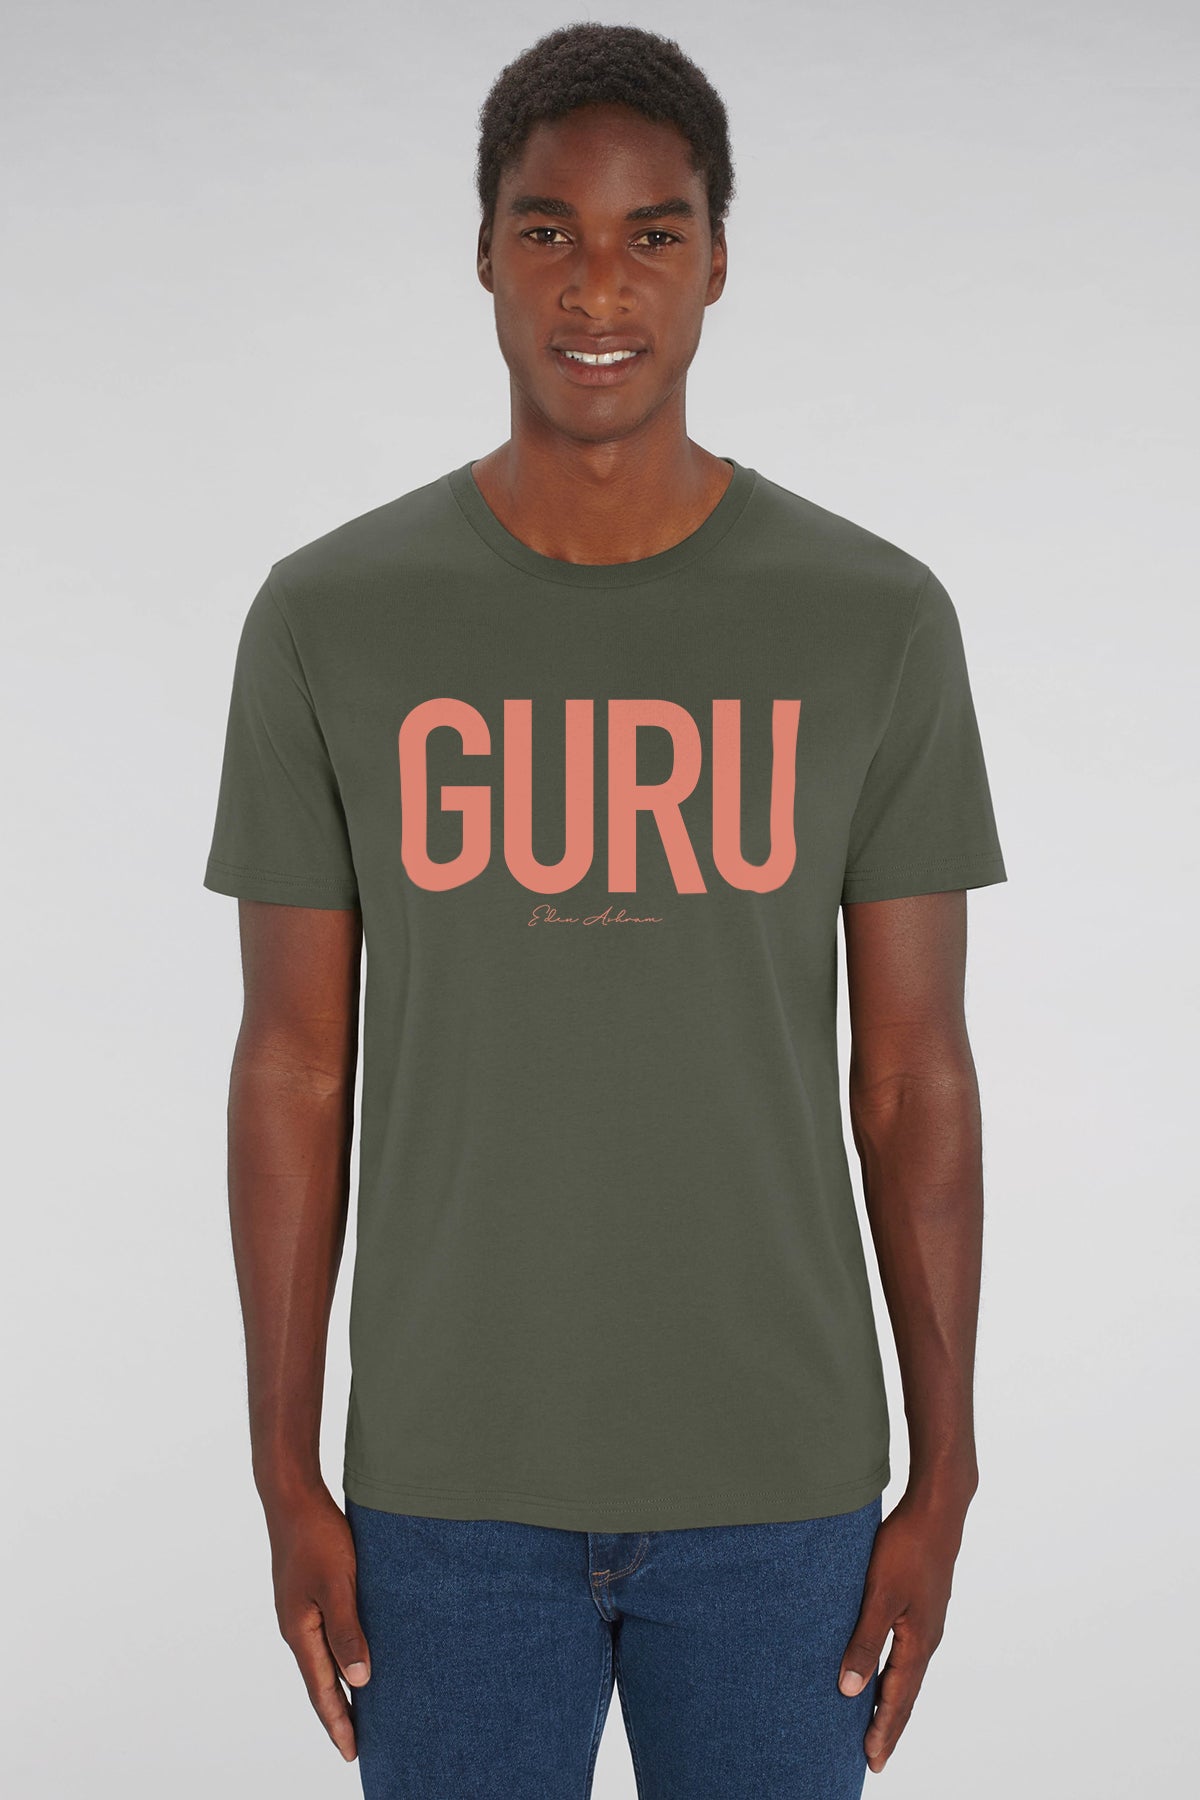 EDEN ASHRAM Guru Premium Classic T-Shirt